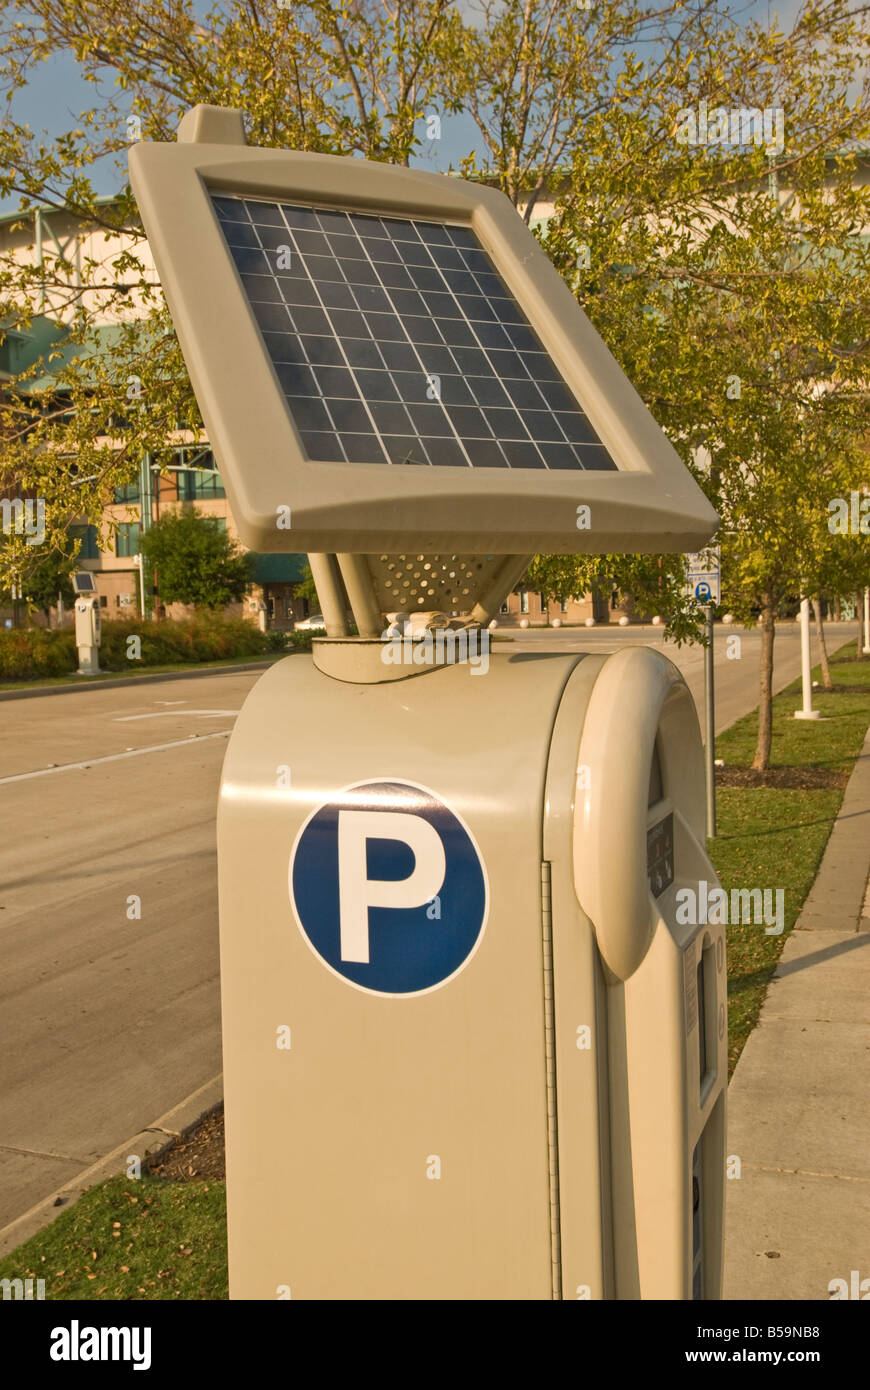 Solar Energy panel solar power going green Solar technology solar powered multi space parking meter Houston Texas Stock Photo